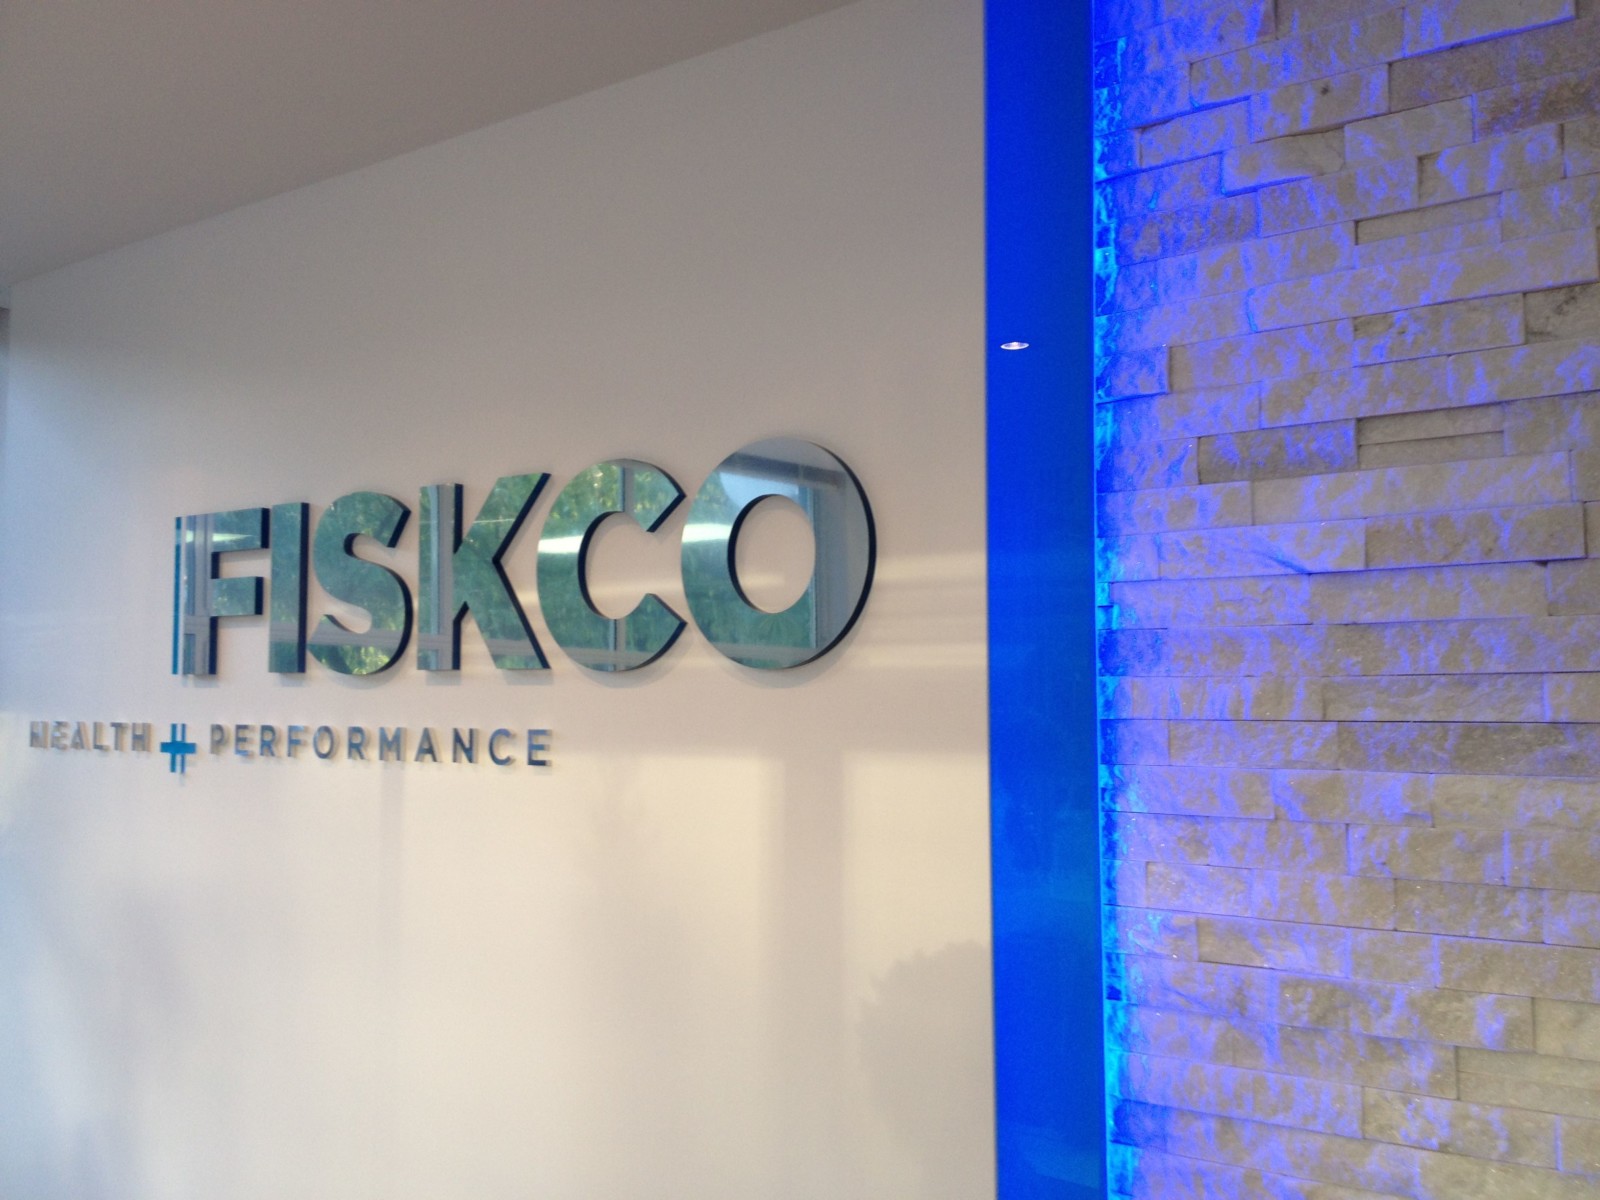 Fiskco Brand Identity